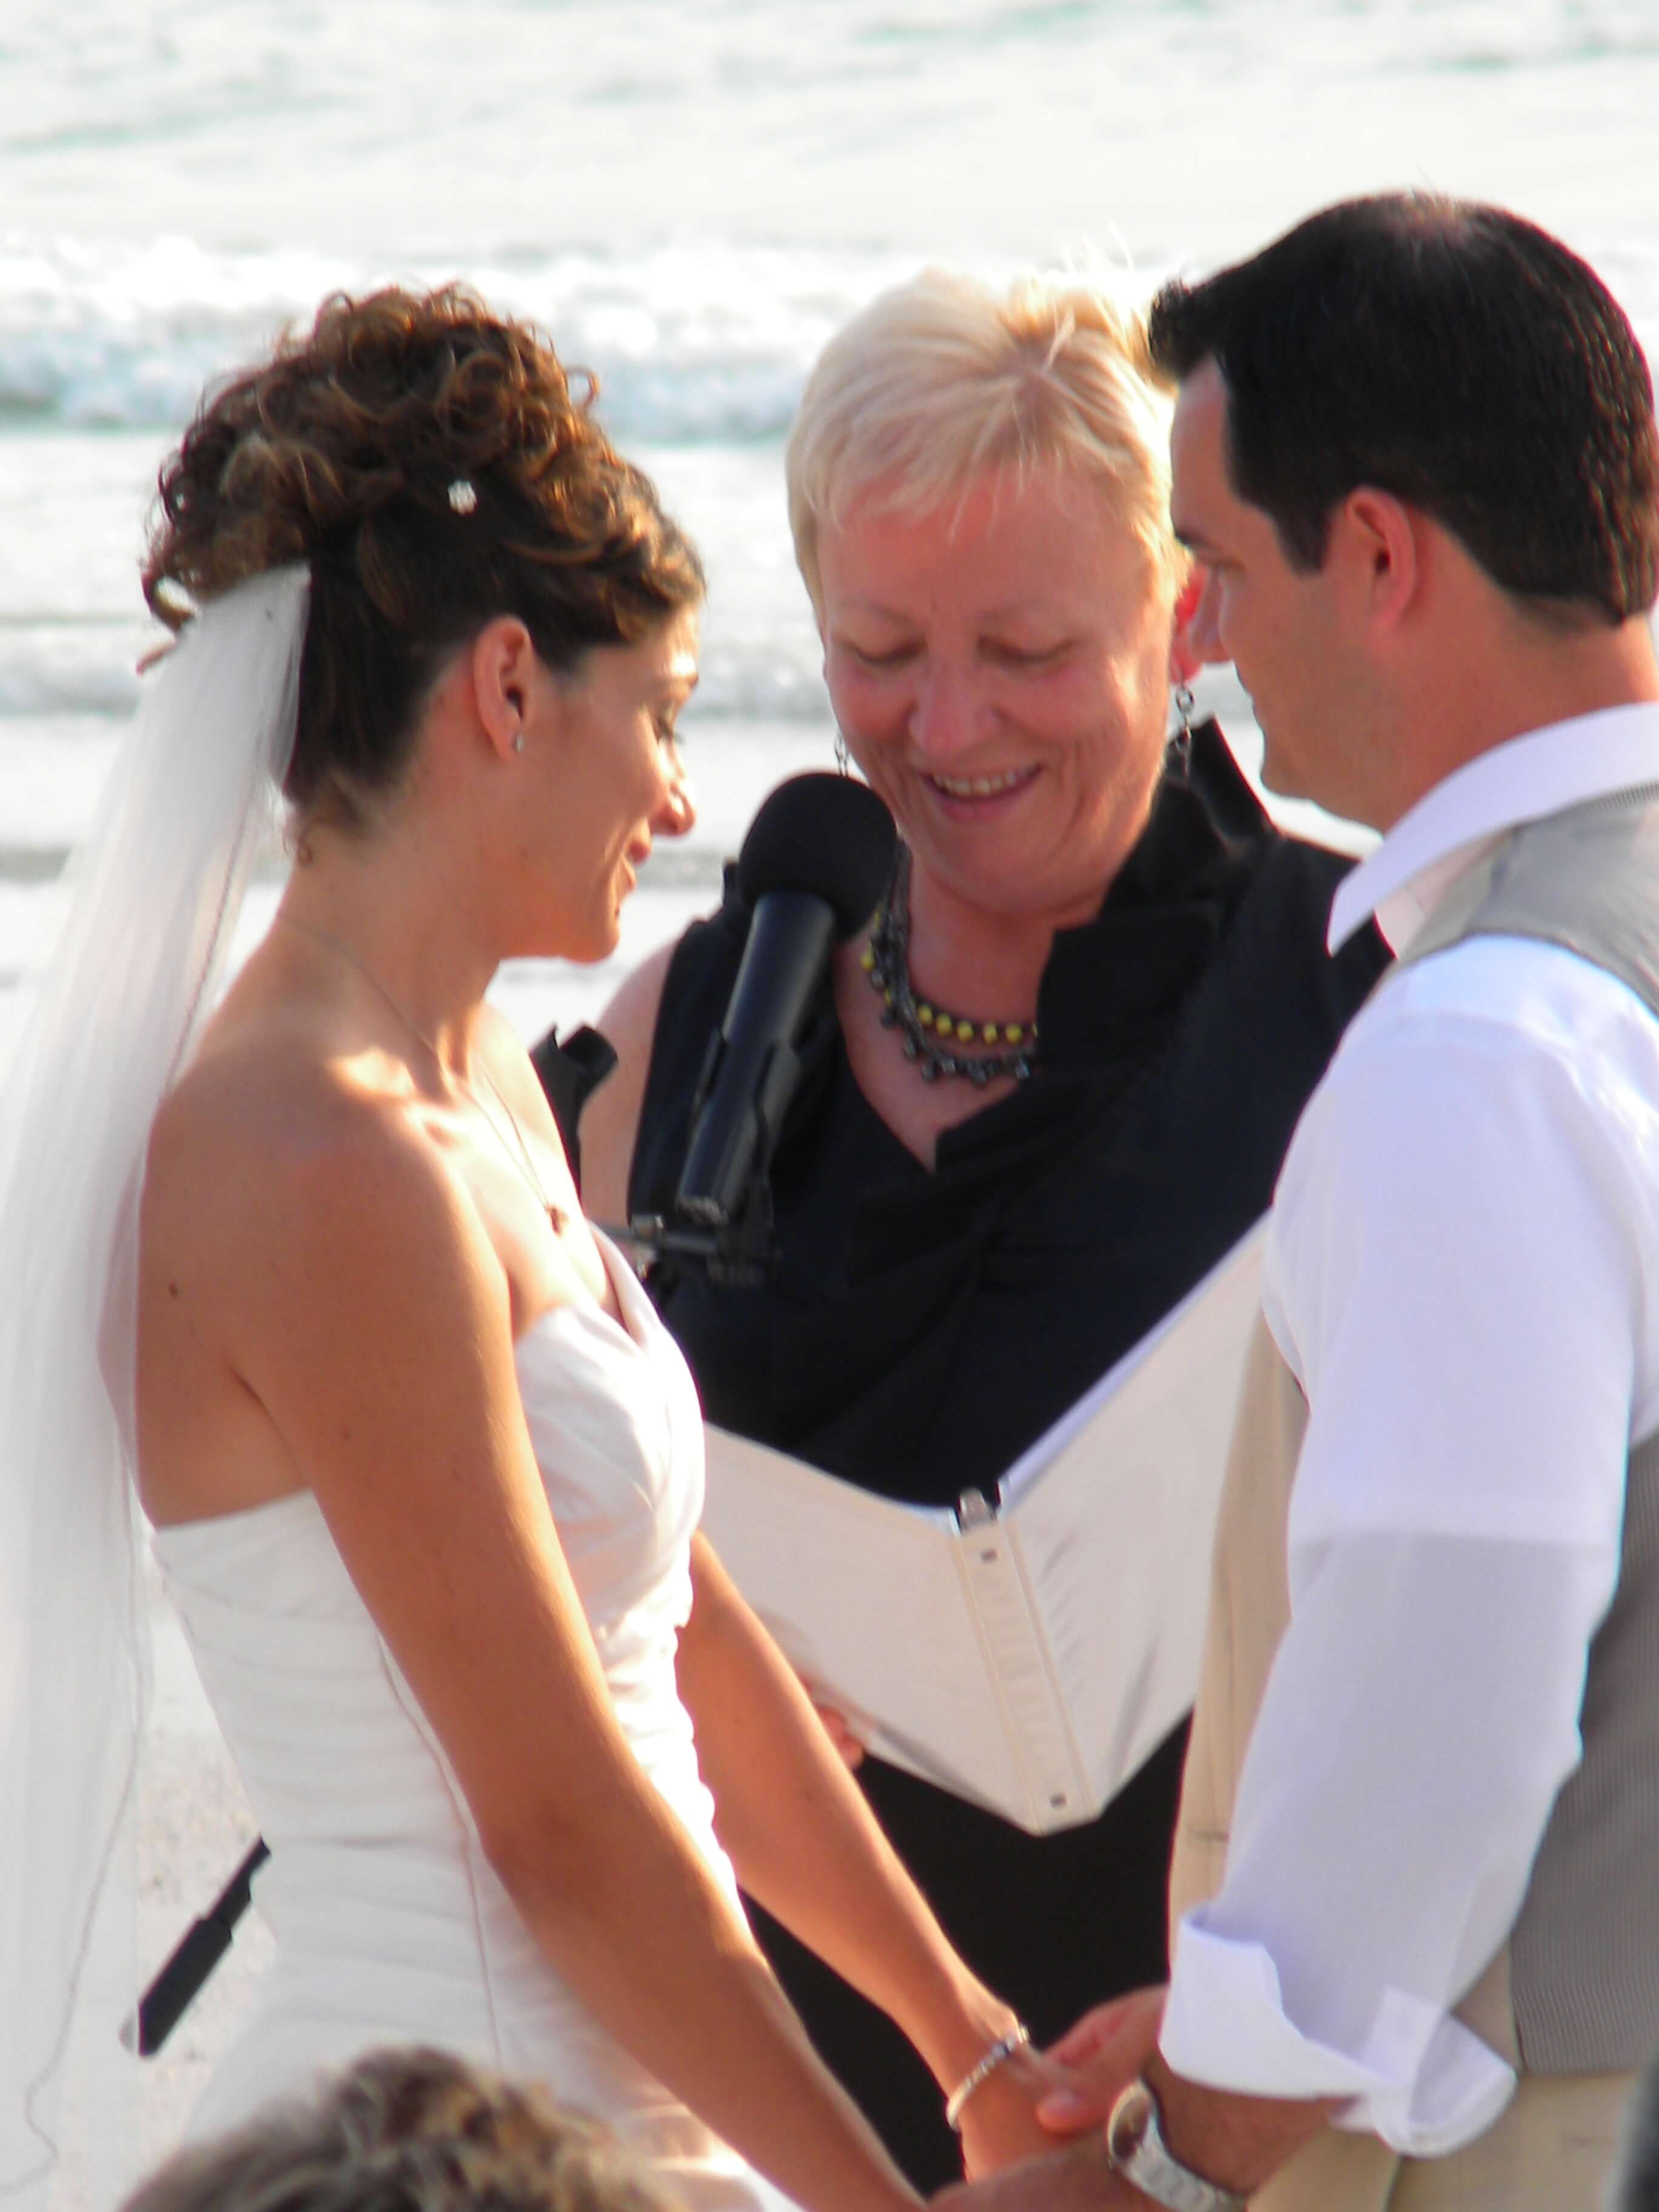 Eileen (wedding officiant) wearing black officiating a beach wedding